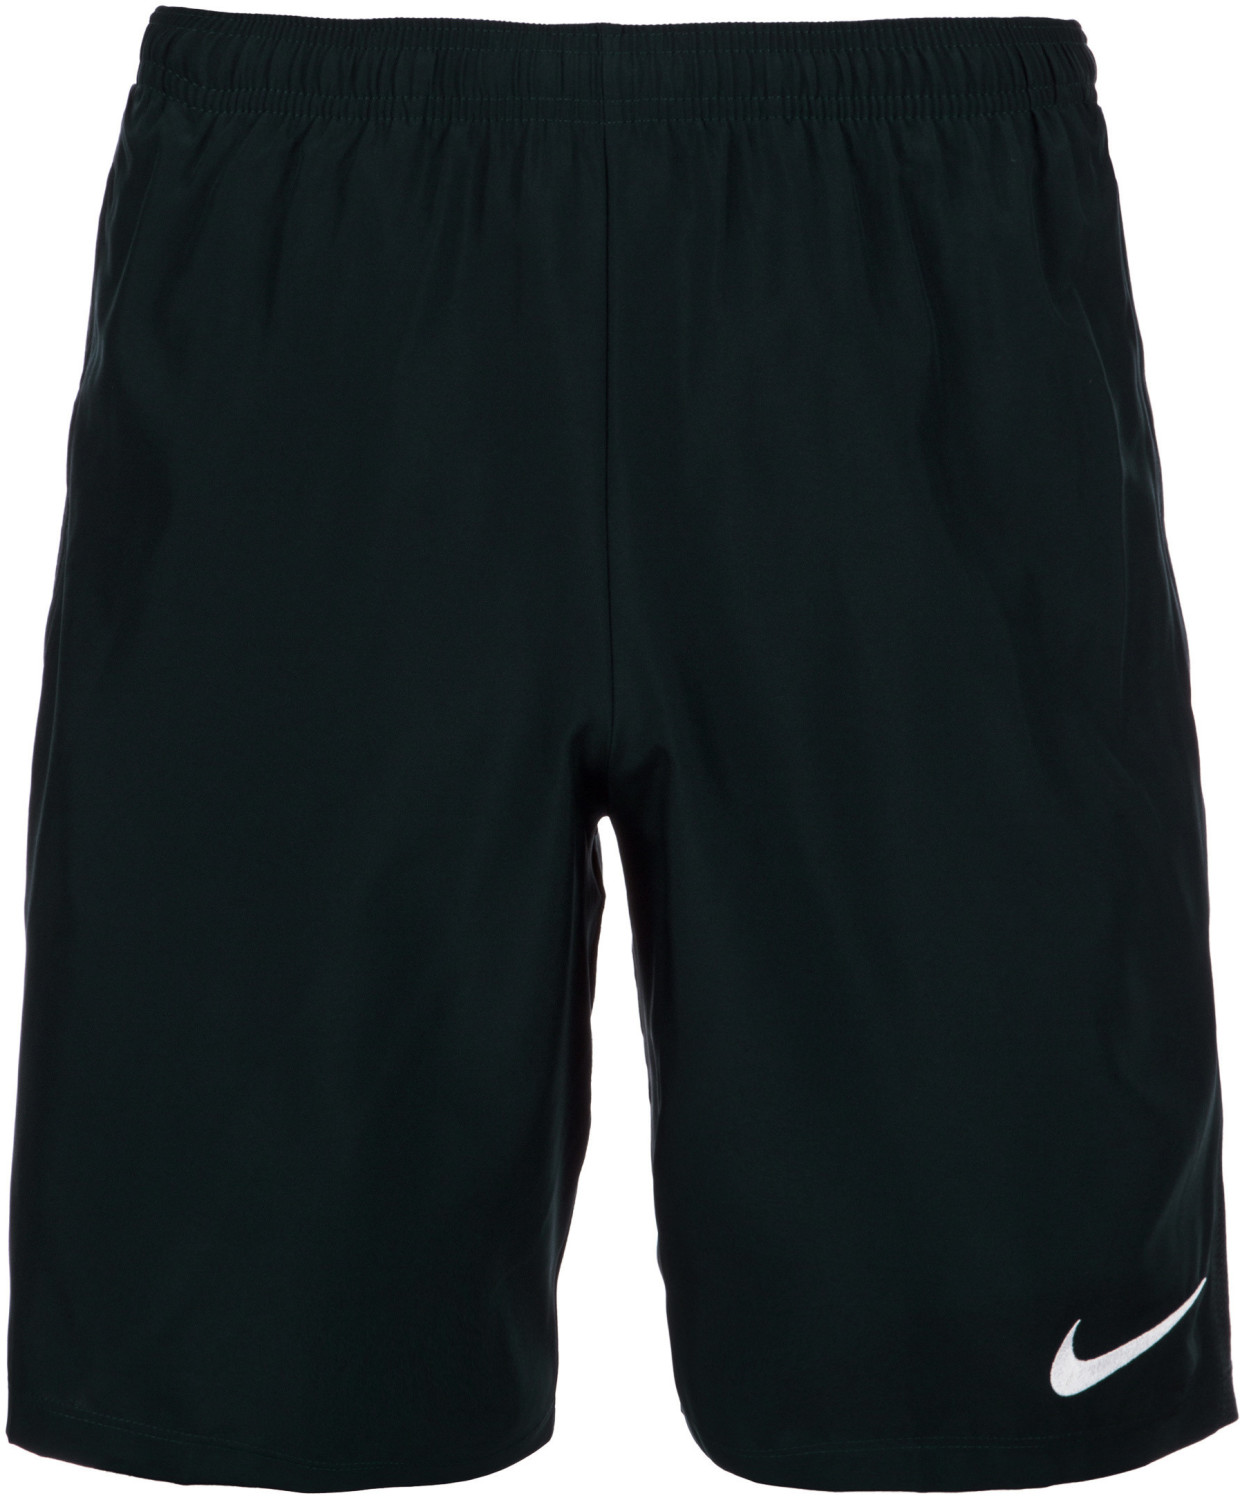 Nike Academy 18 Woven Short schwarz